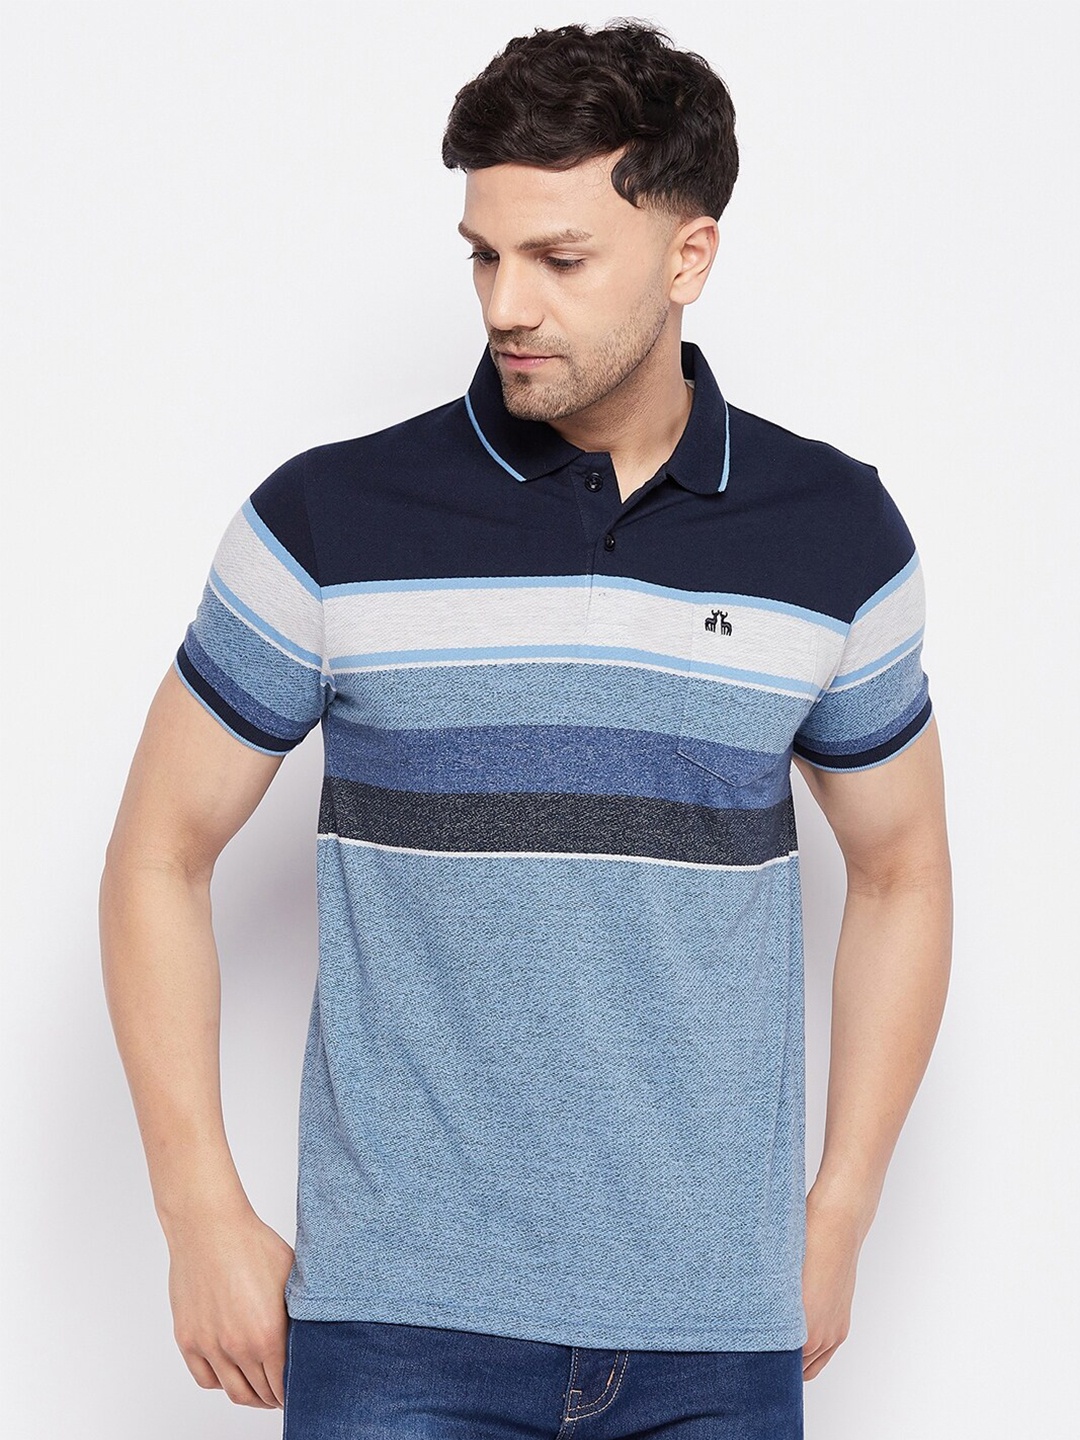 

98 Degree North Striped Polo Collar Cotton T-Shirt, Blue